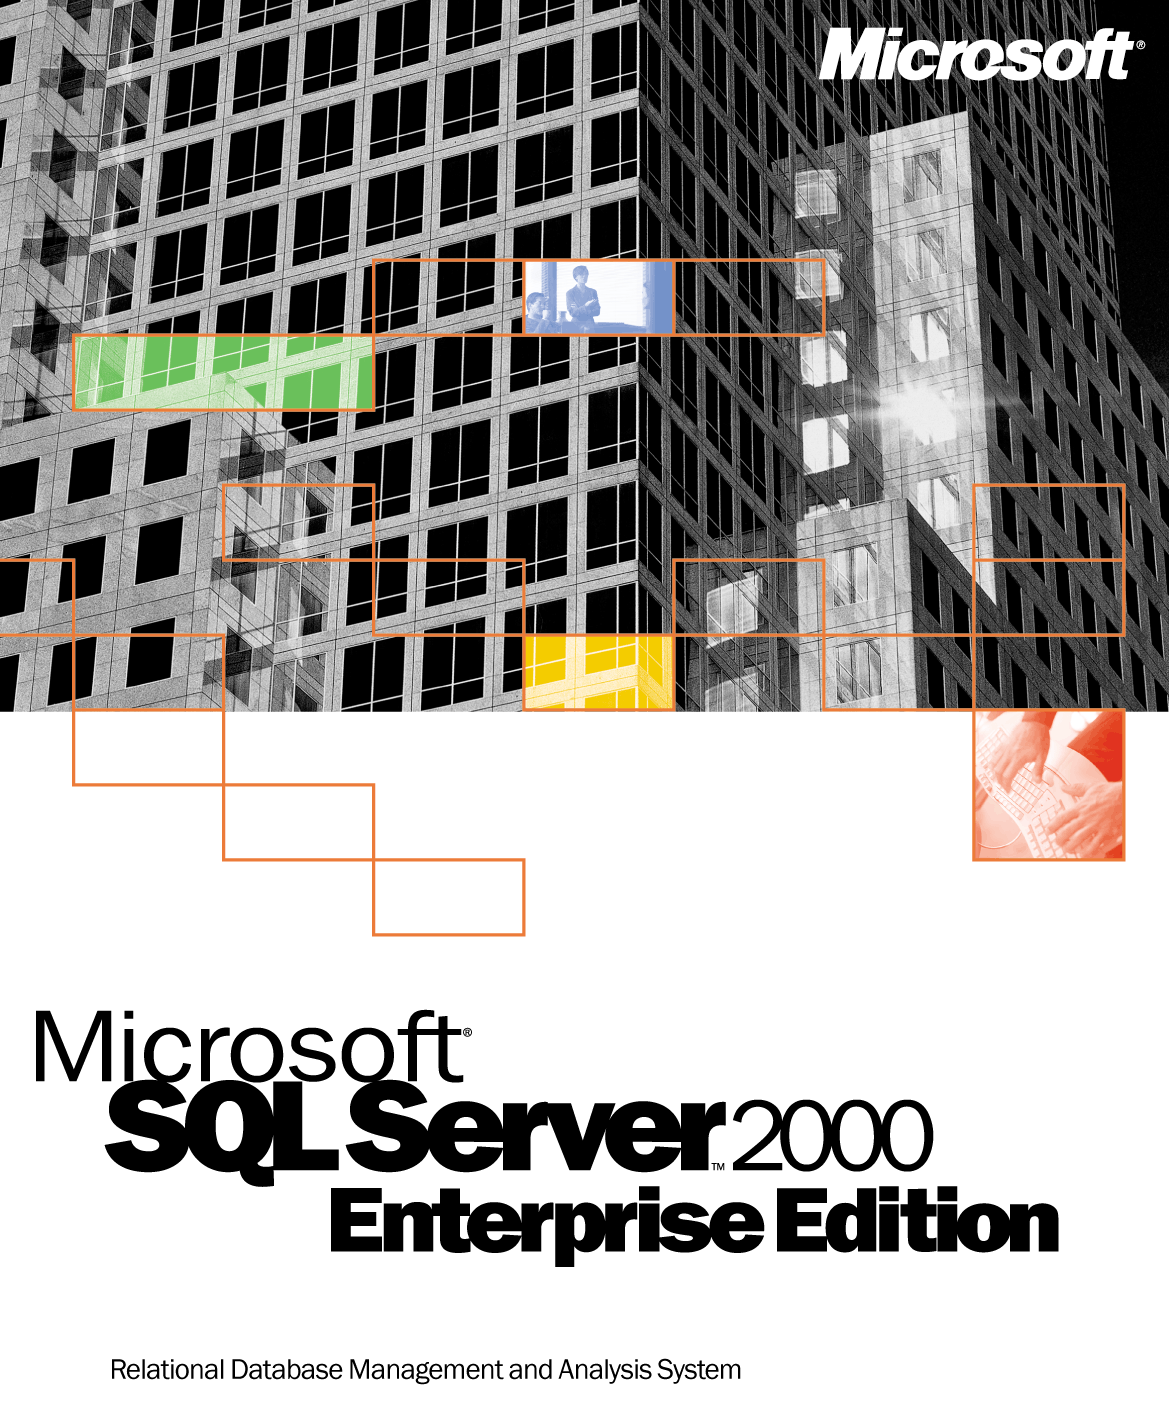 MICROSOFT SQL SERVER 2000 ENTERPRISE EDITION OFFERS A COMPLETE